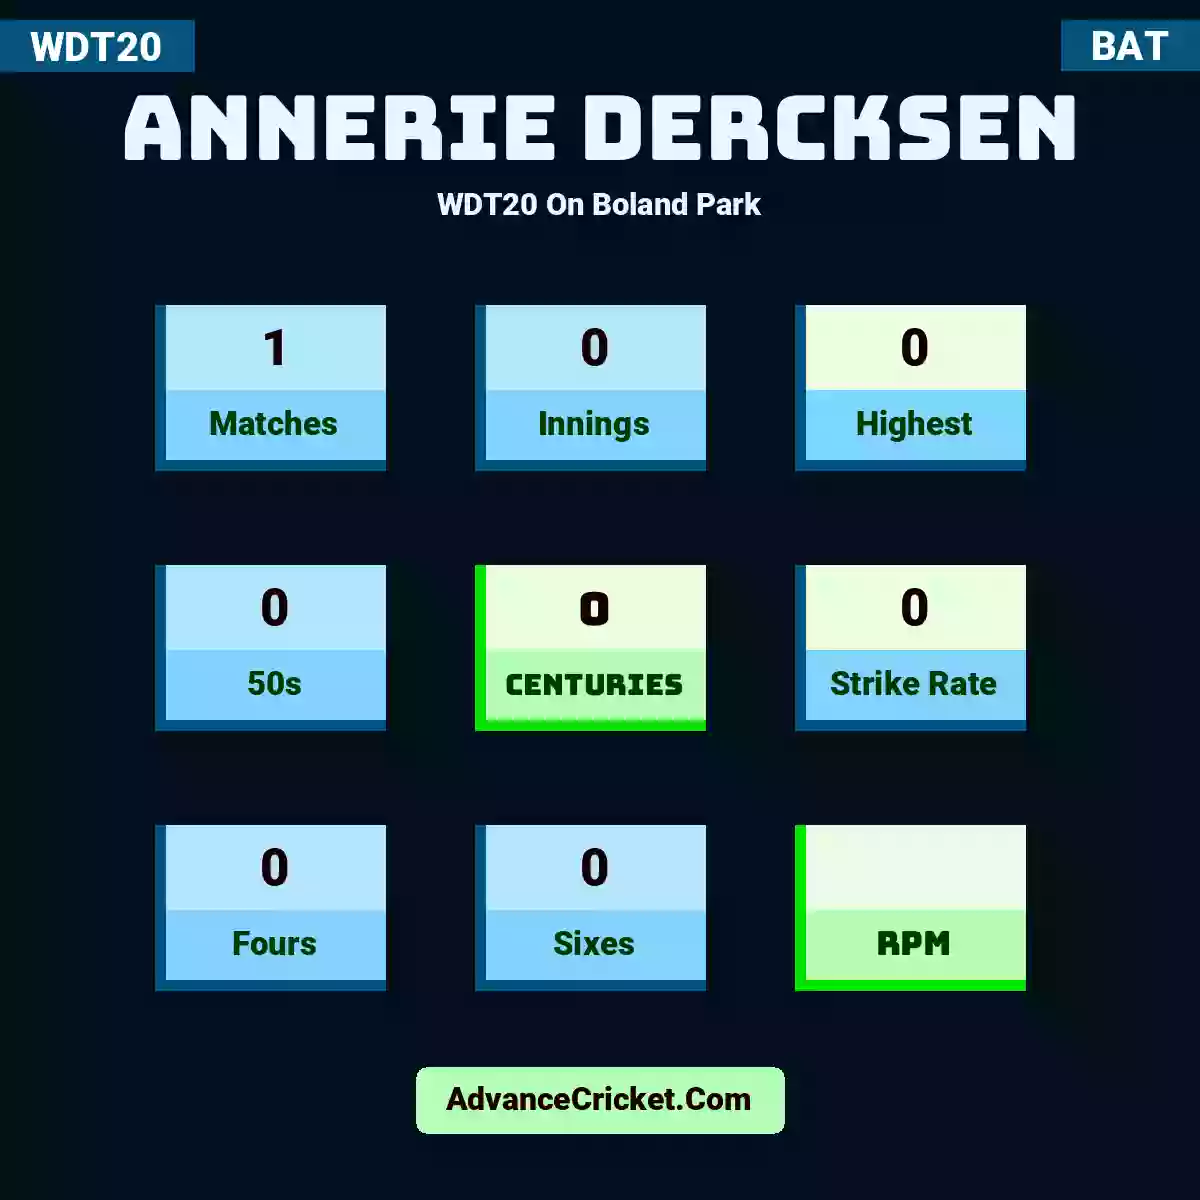 Annerie Dercksen WDT20  On Boland Park, Annerie Dercksen played 1 matches, scored 0 runs as highest, 0 half-centuries, and 0 centuries, with a strike rate of 0. A.Dercksen hit 0 fours and 0 sixes.